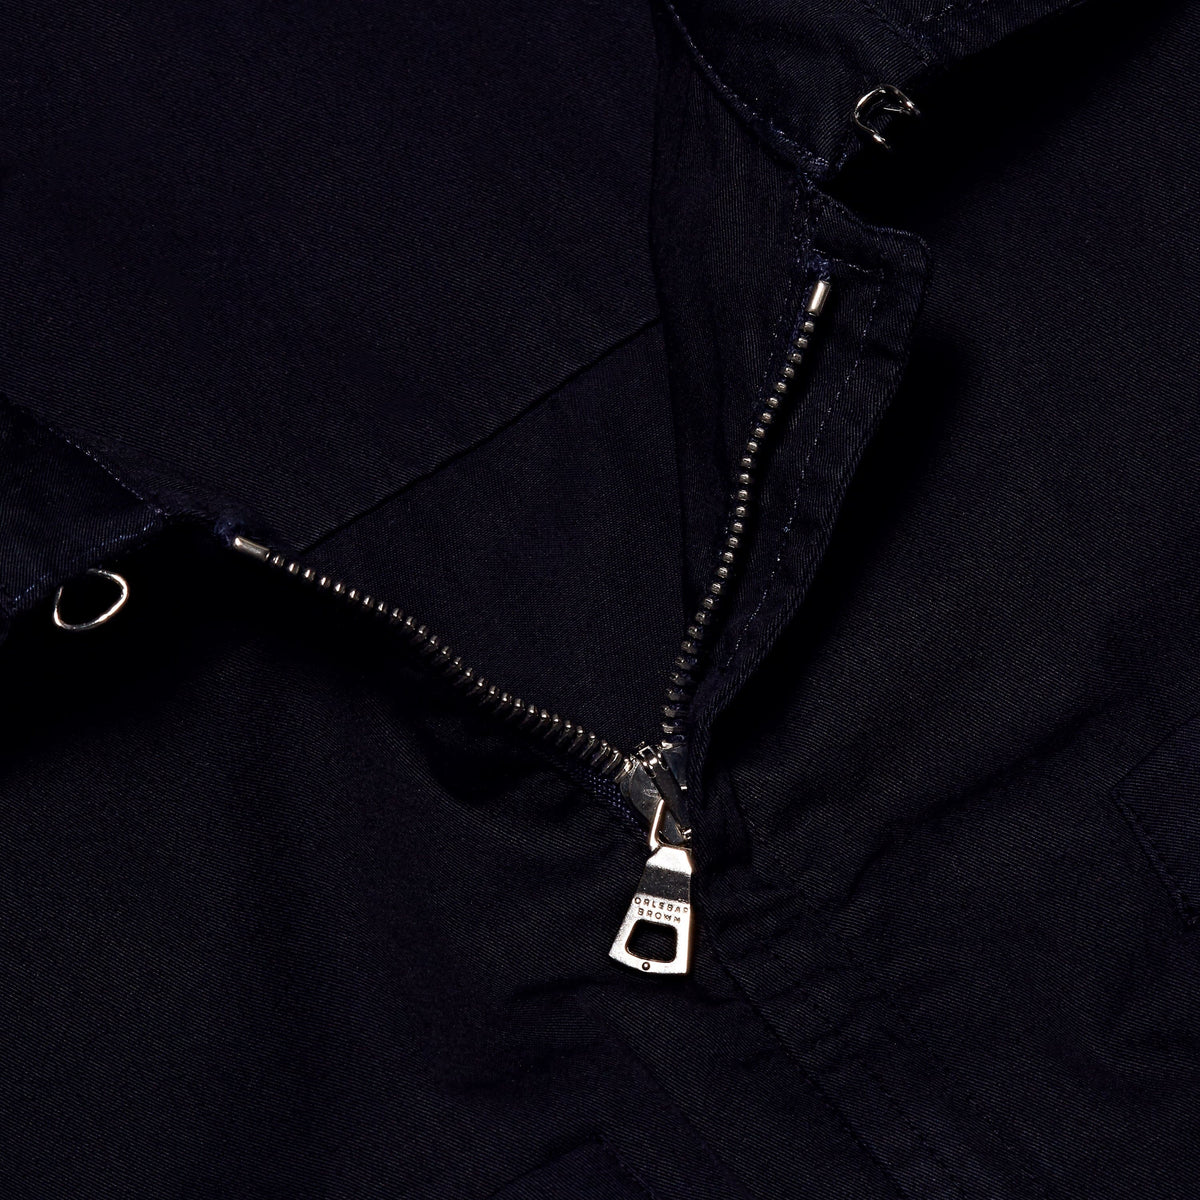 Half-Zip Merino Knit Shirt - Moonraker Edition - By Orlebar Brown - 007STORE